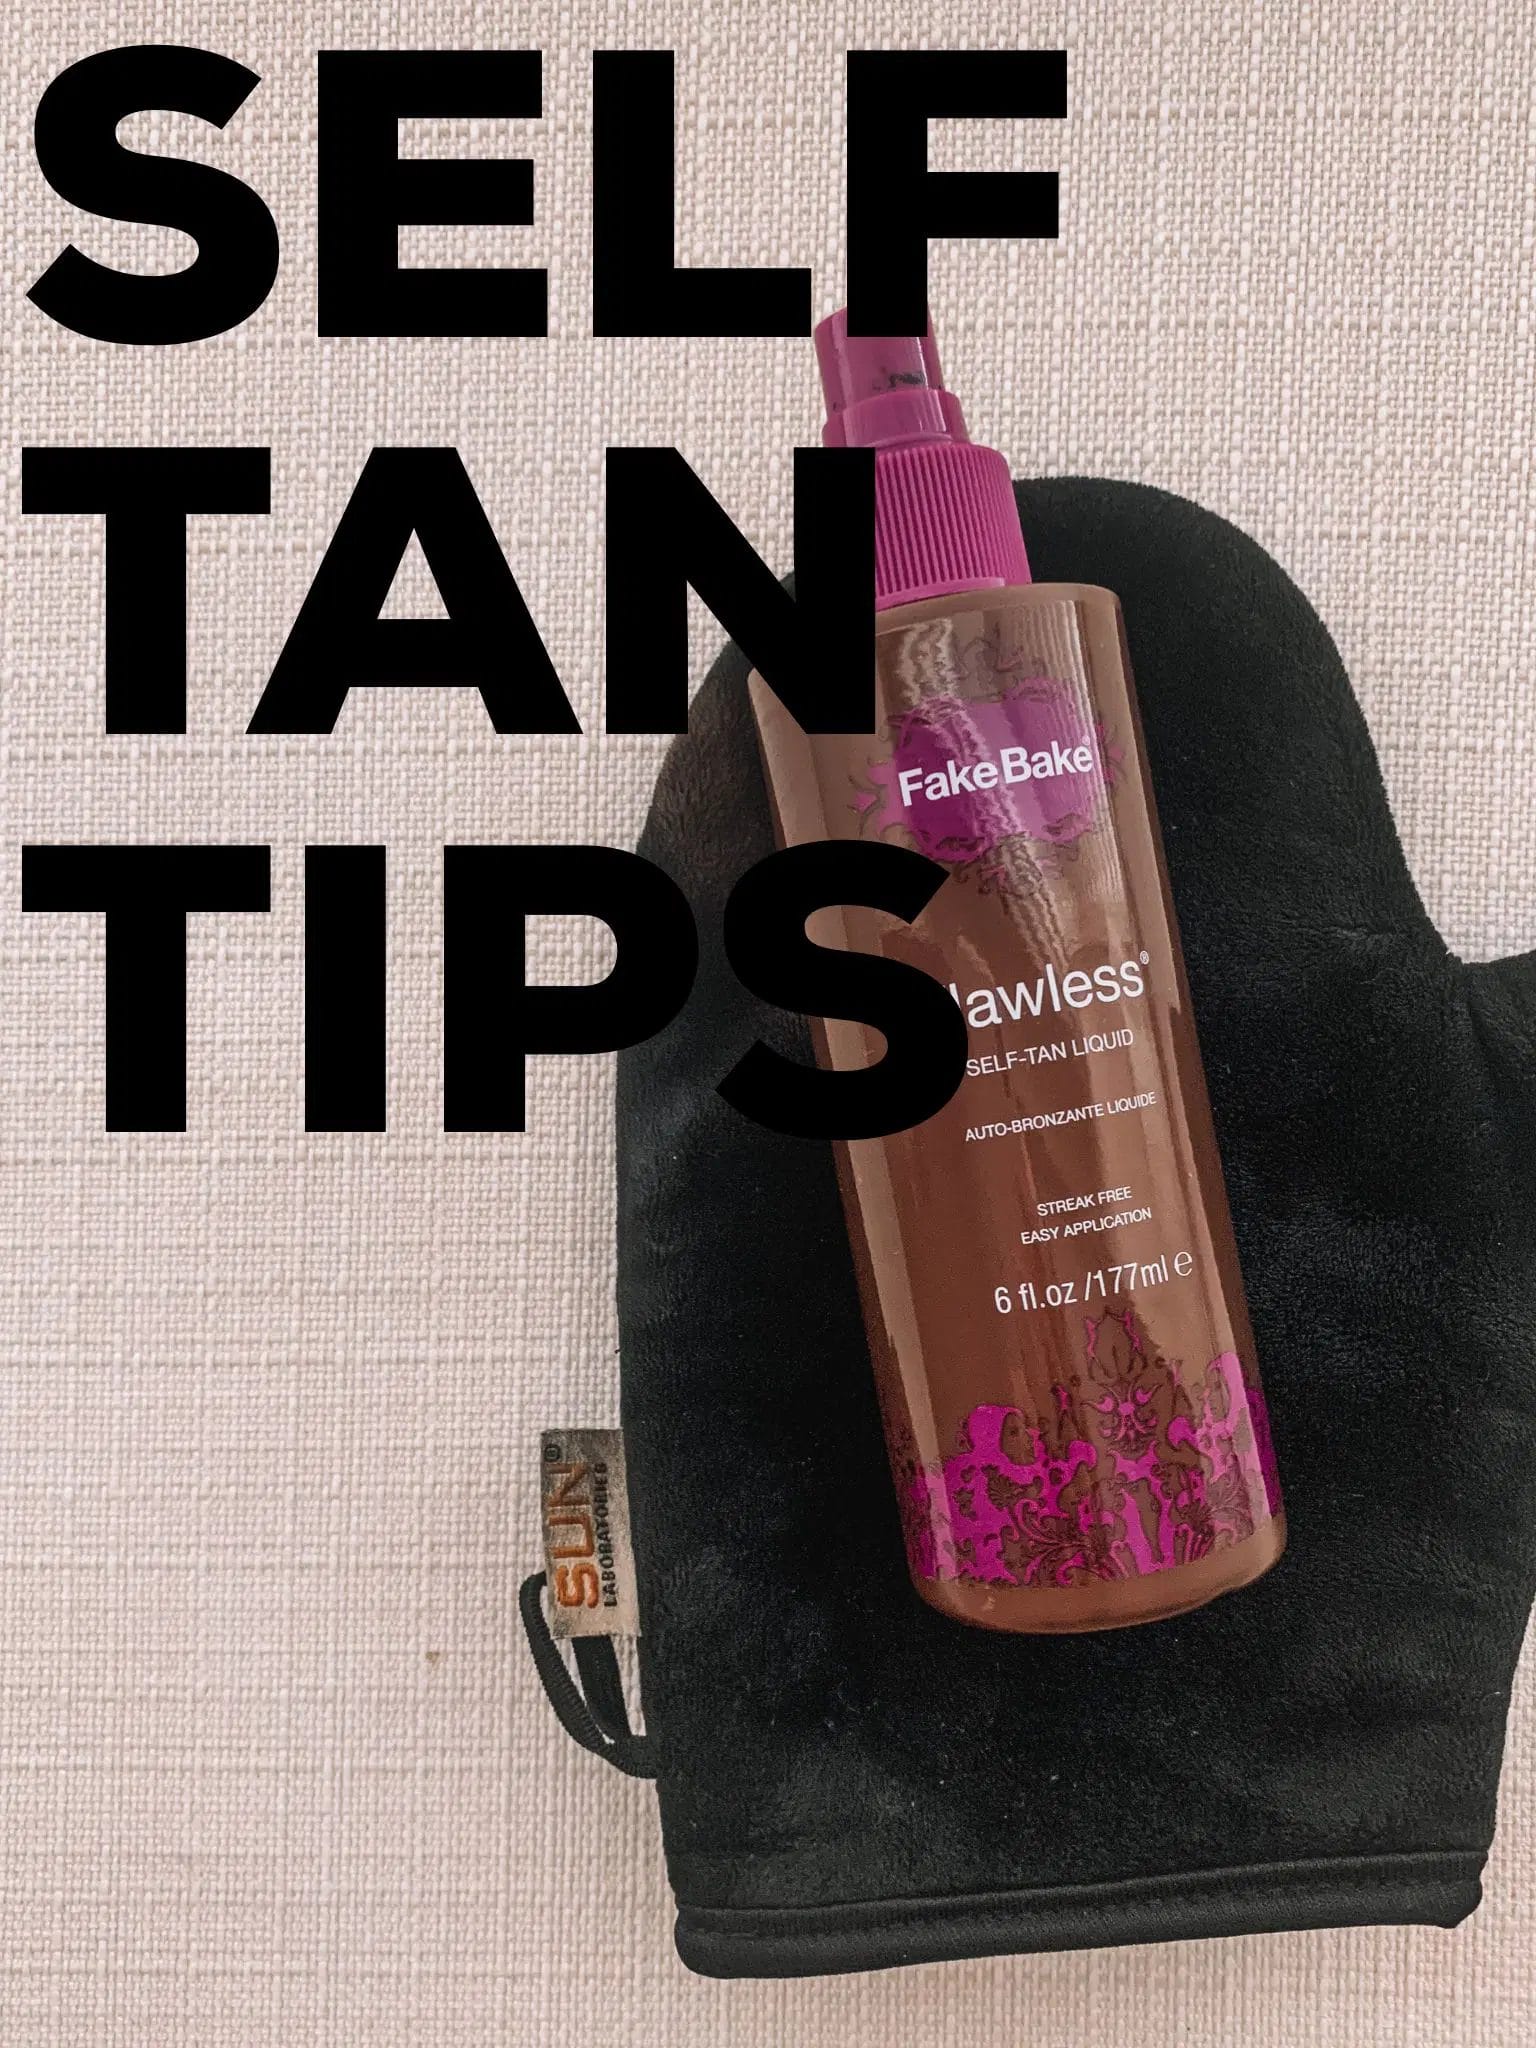 Tips for a Natural Self Tan at Home